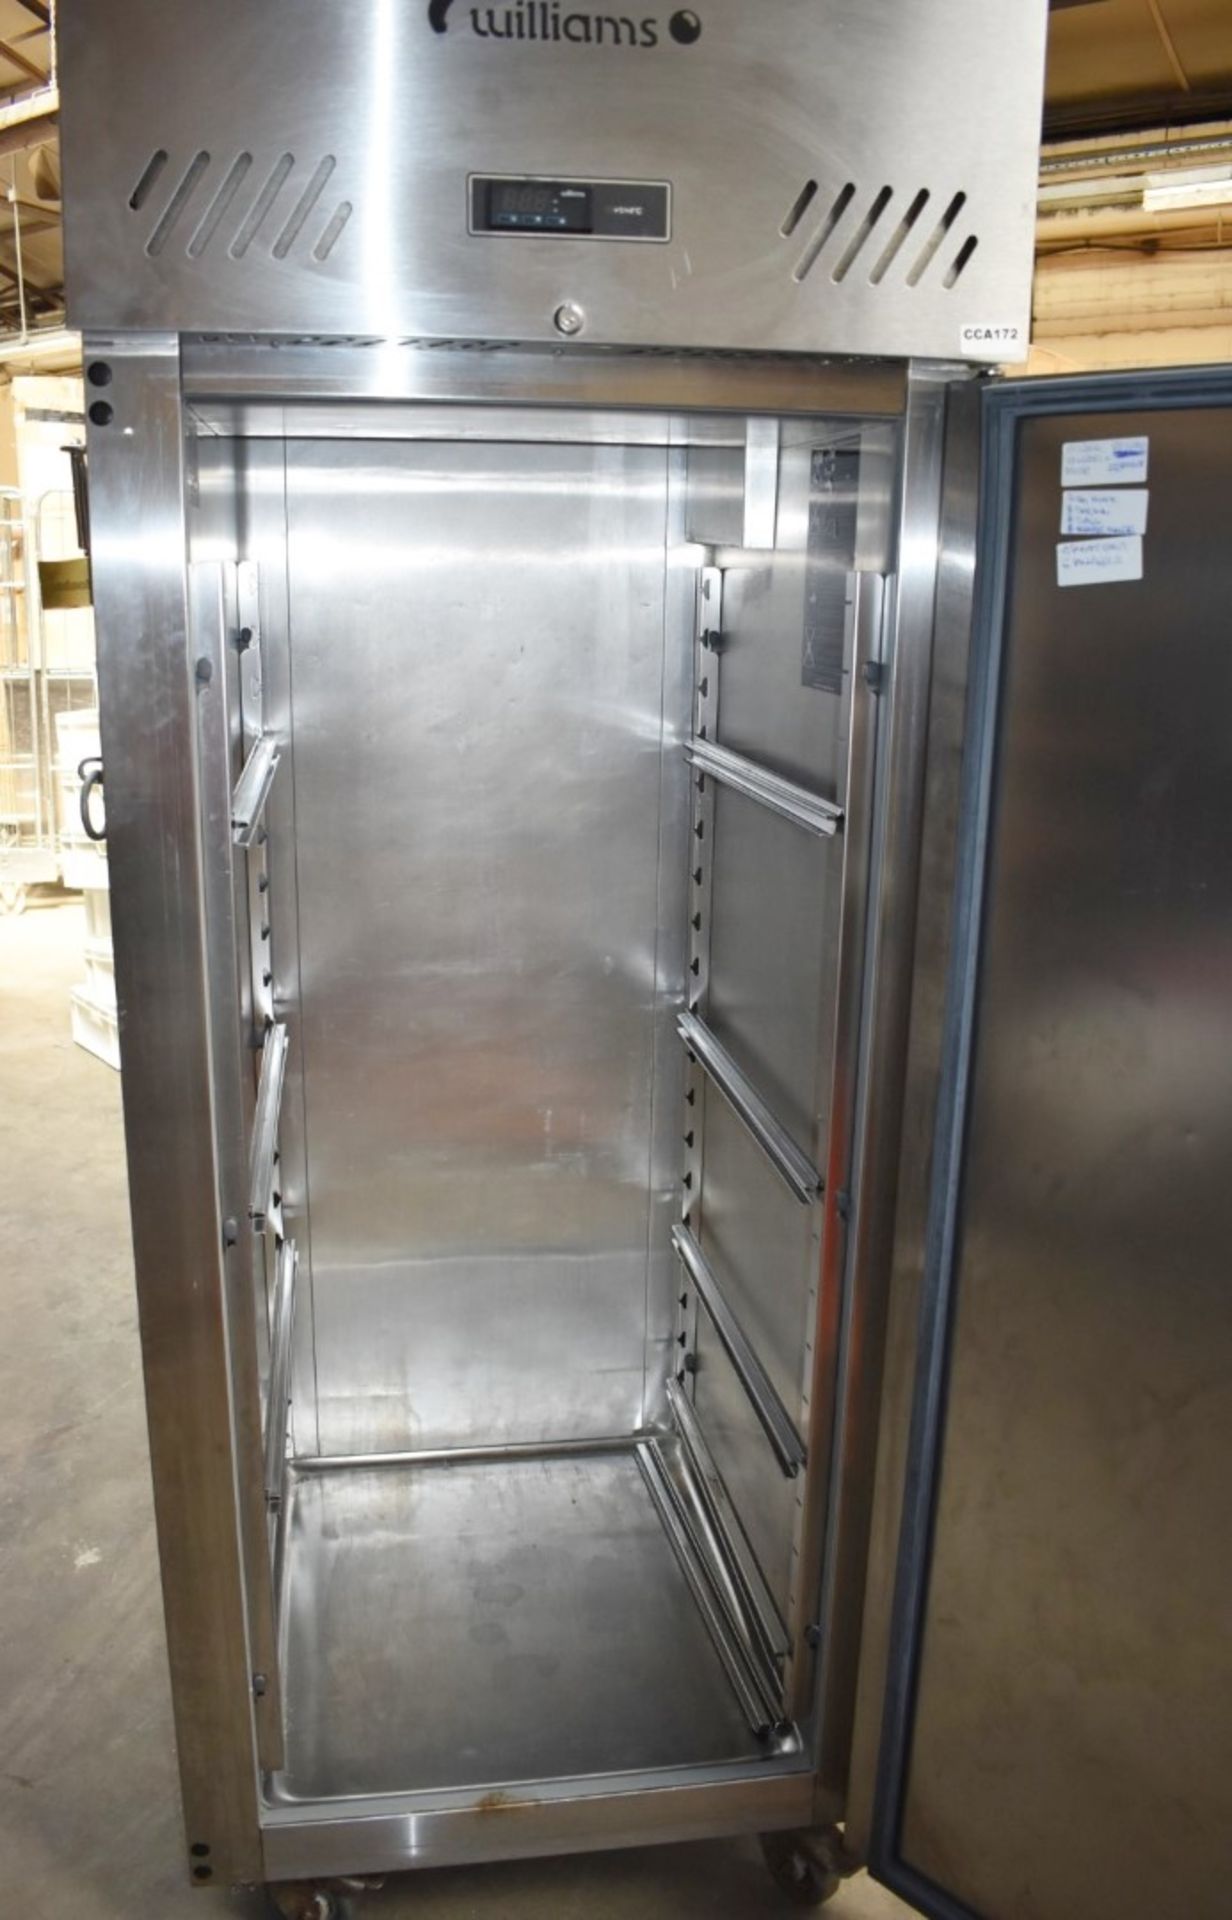 1 x Williams Jade Upright Single Door Refrigerator With Stainless Steel Exterior - Model HJ1TSA - - Image 3 of 11